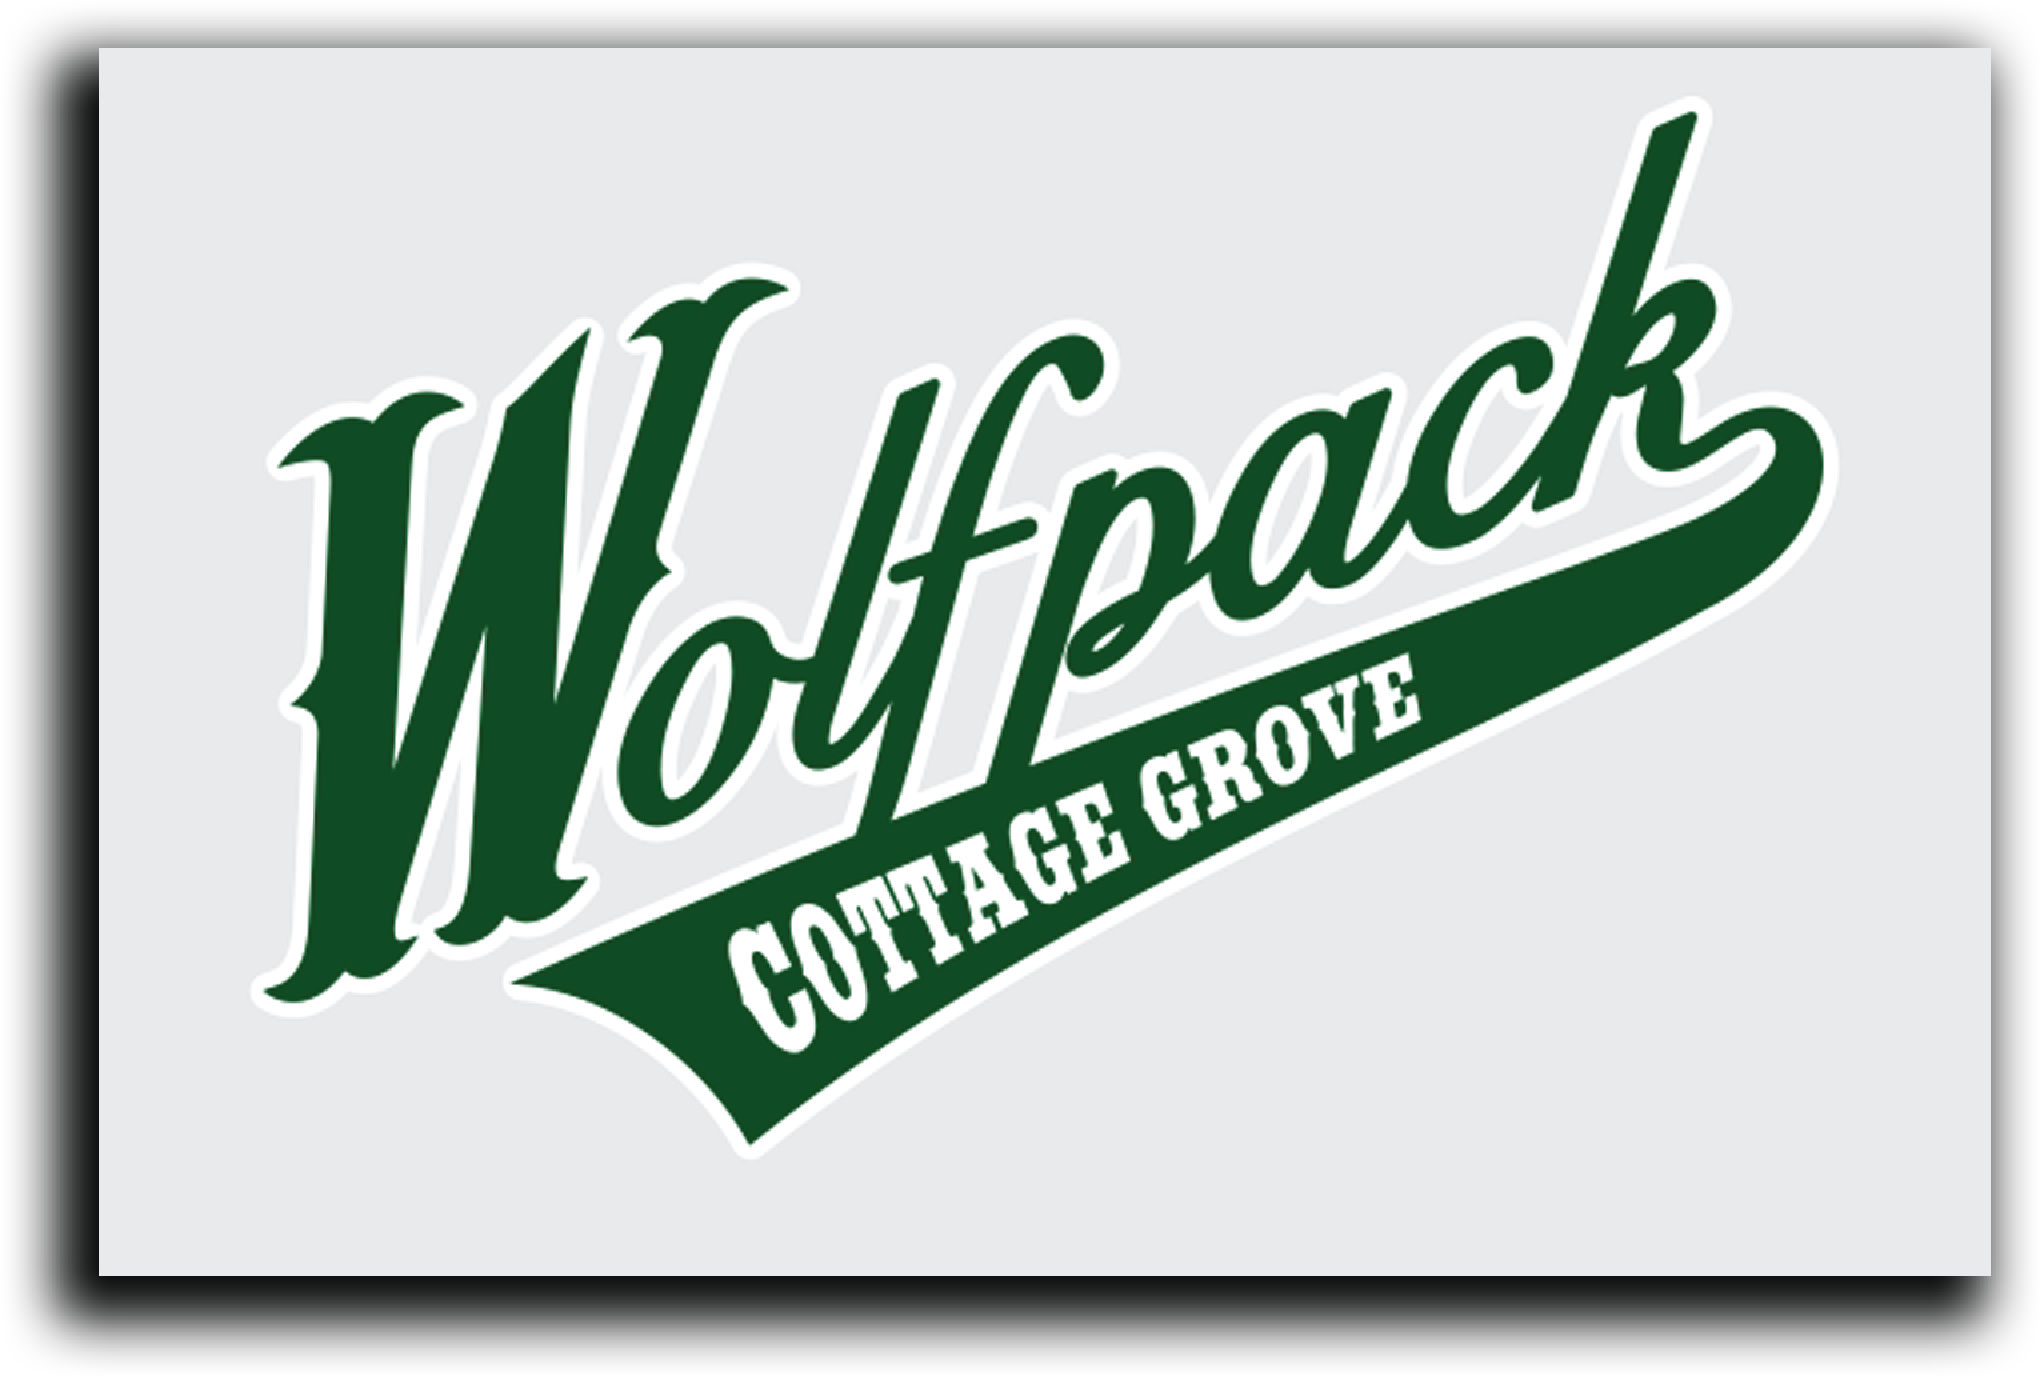 Wolfpack Cottage Grove Sticker-Stickers-Advanced Sportswear